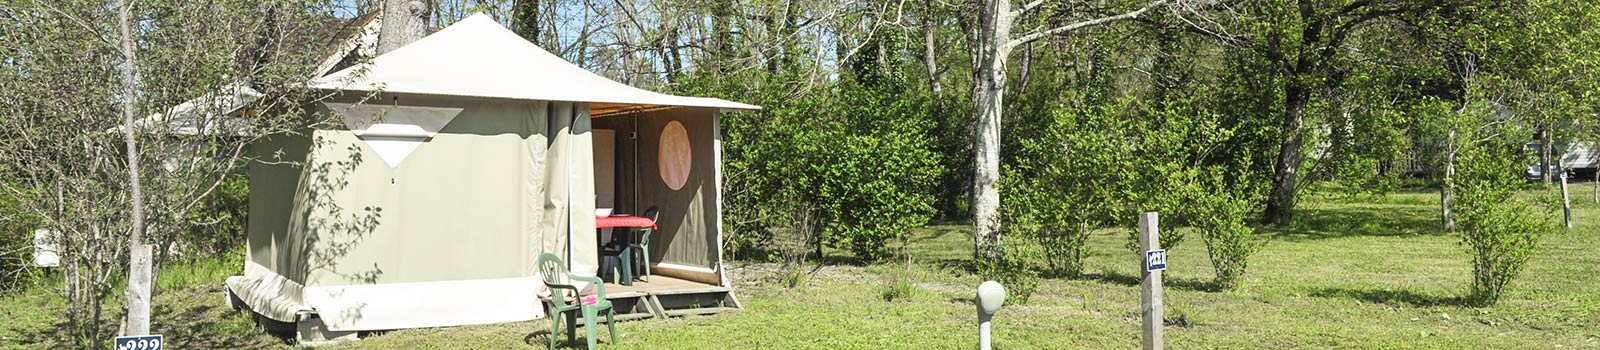 location bungalow camping dordogne